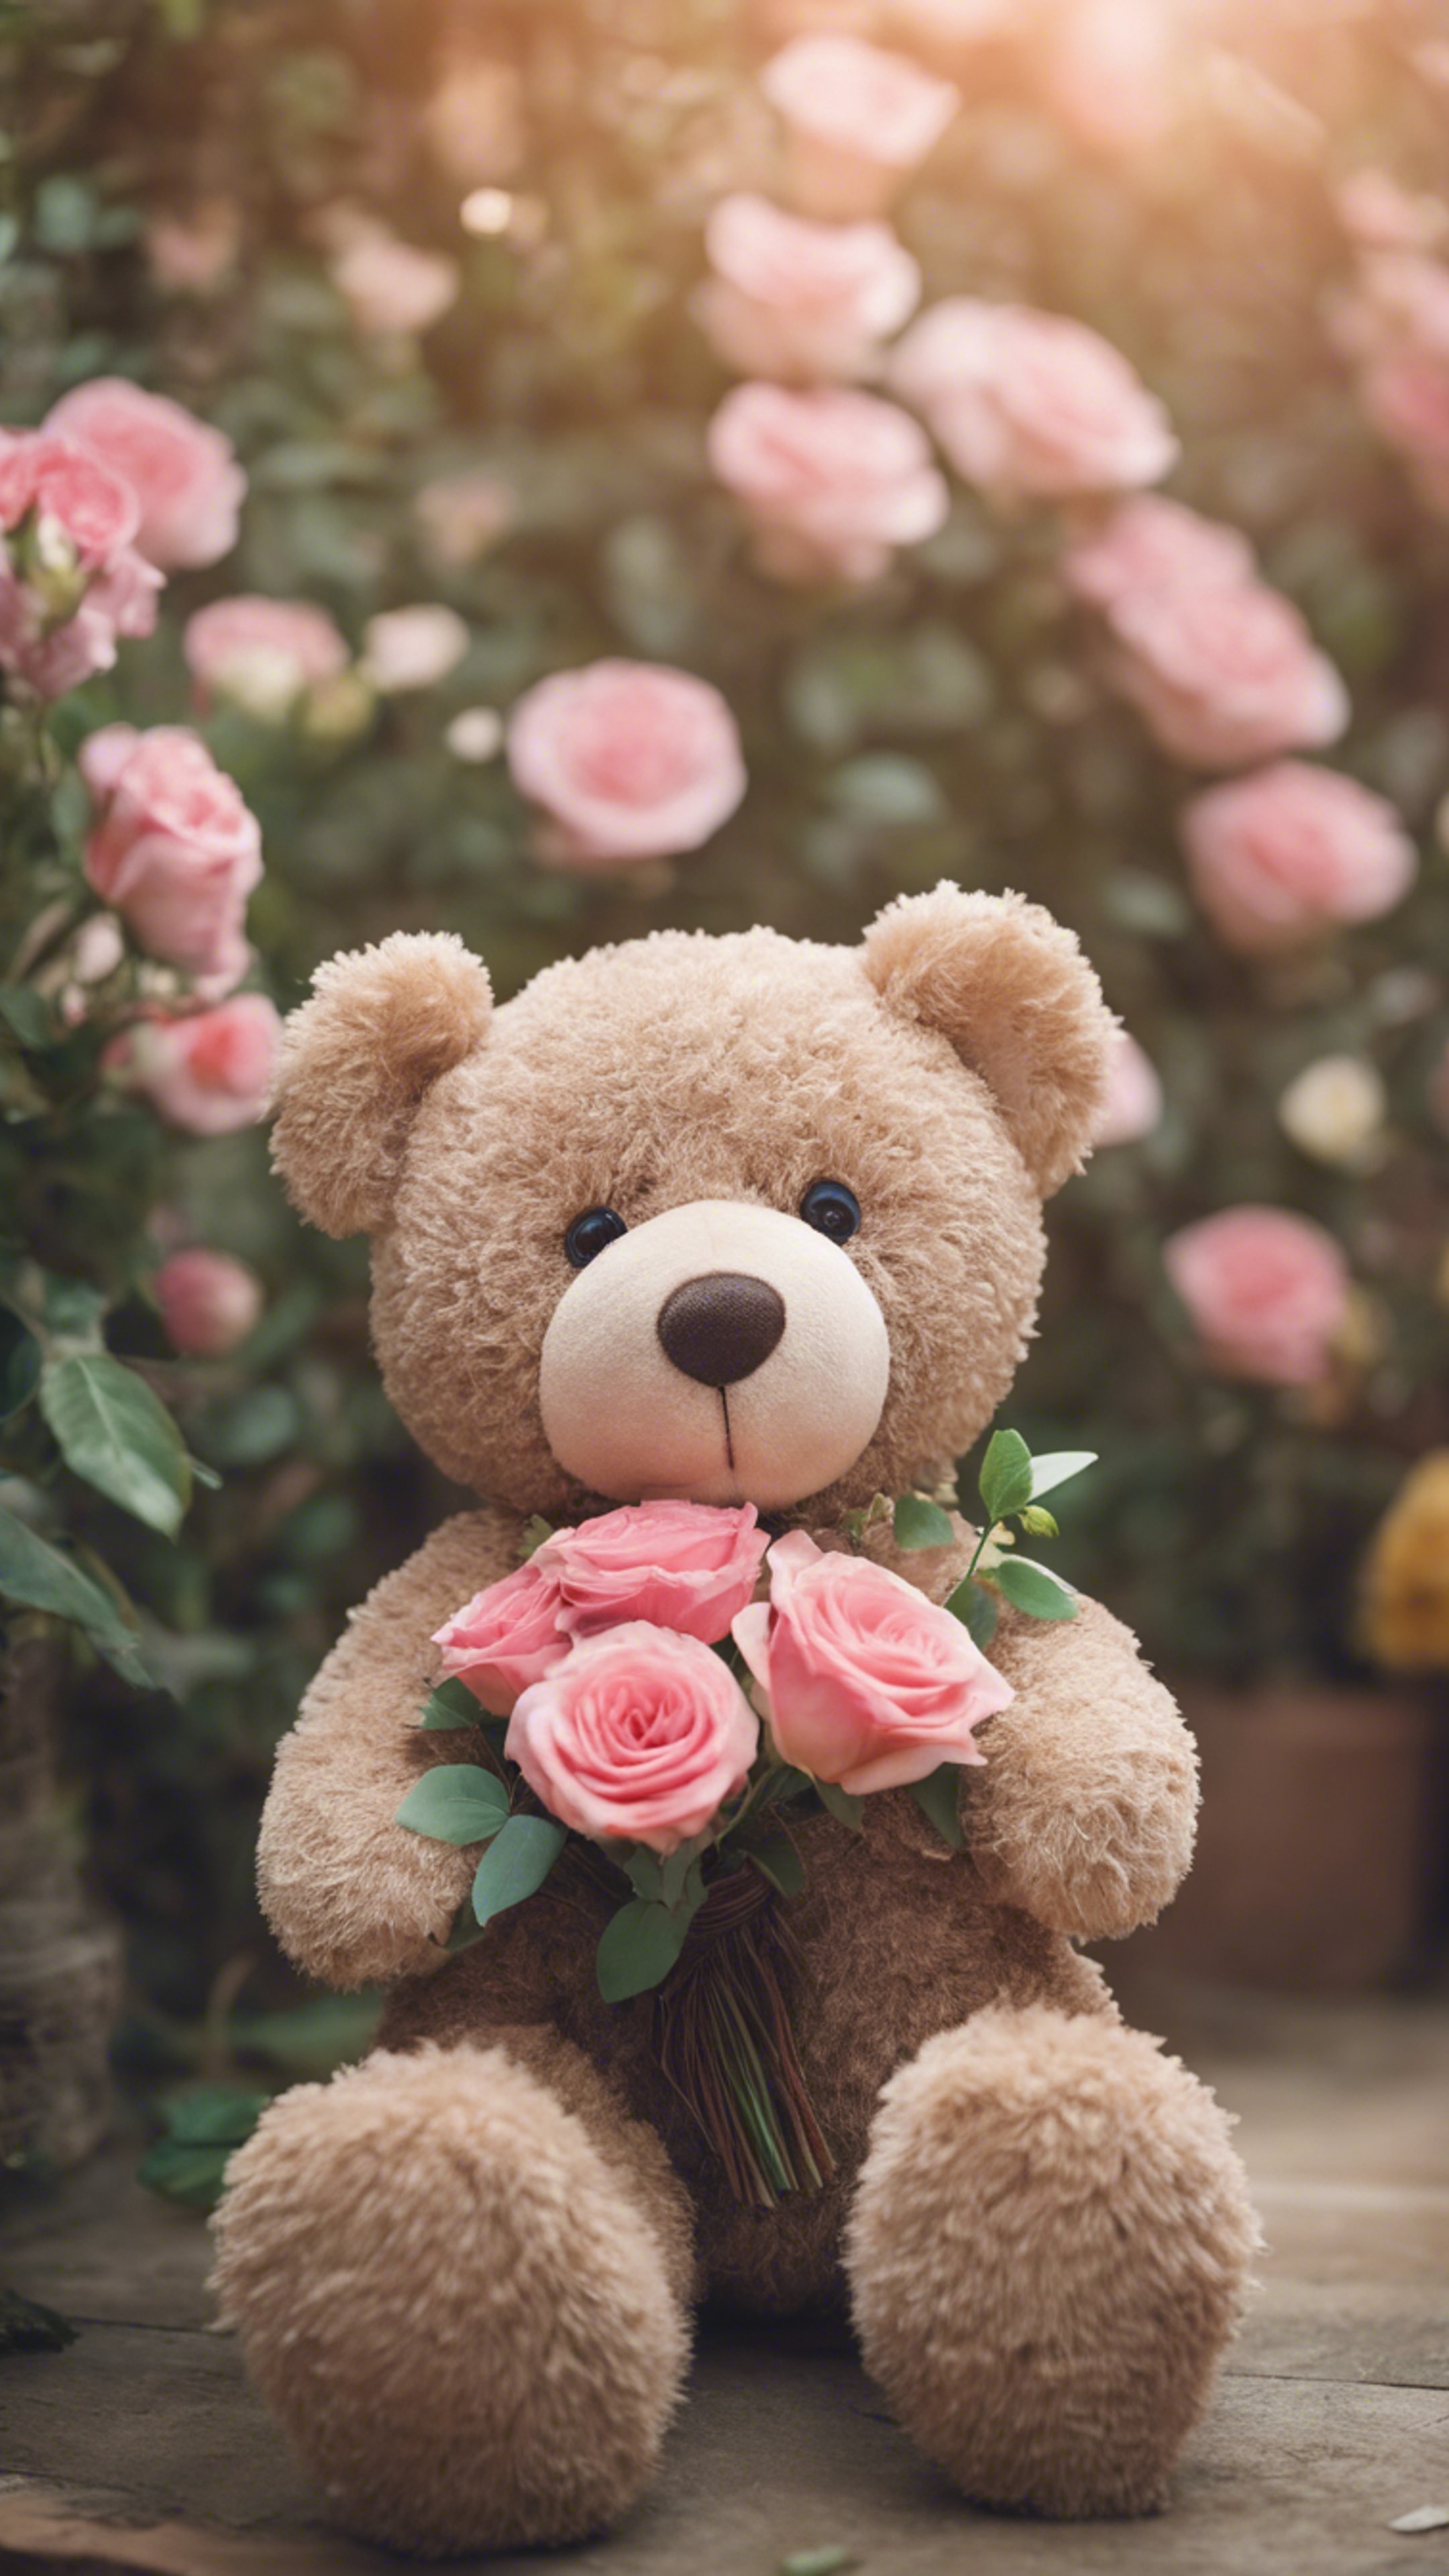 A teddy bear in a romantic setting, holding a bouquet of roses. Fondo de pantalla[0c0a94ba405548b0bff3]